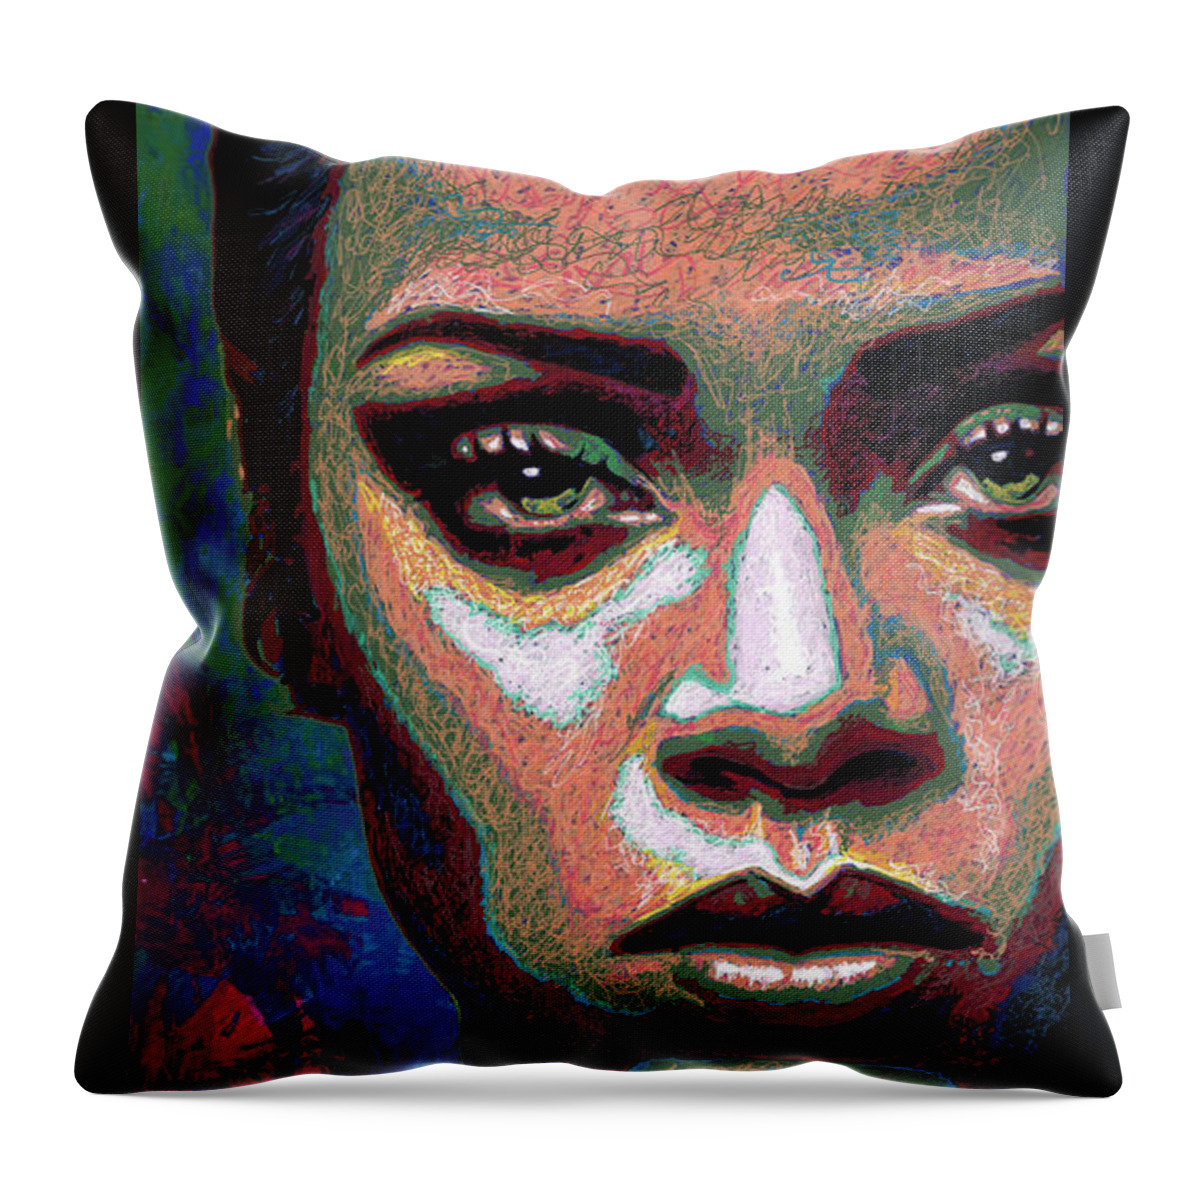 Robyn Rihanna Fenty Throw Pillow featuring the painting Rihanna by Maria Arango